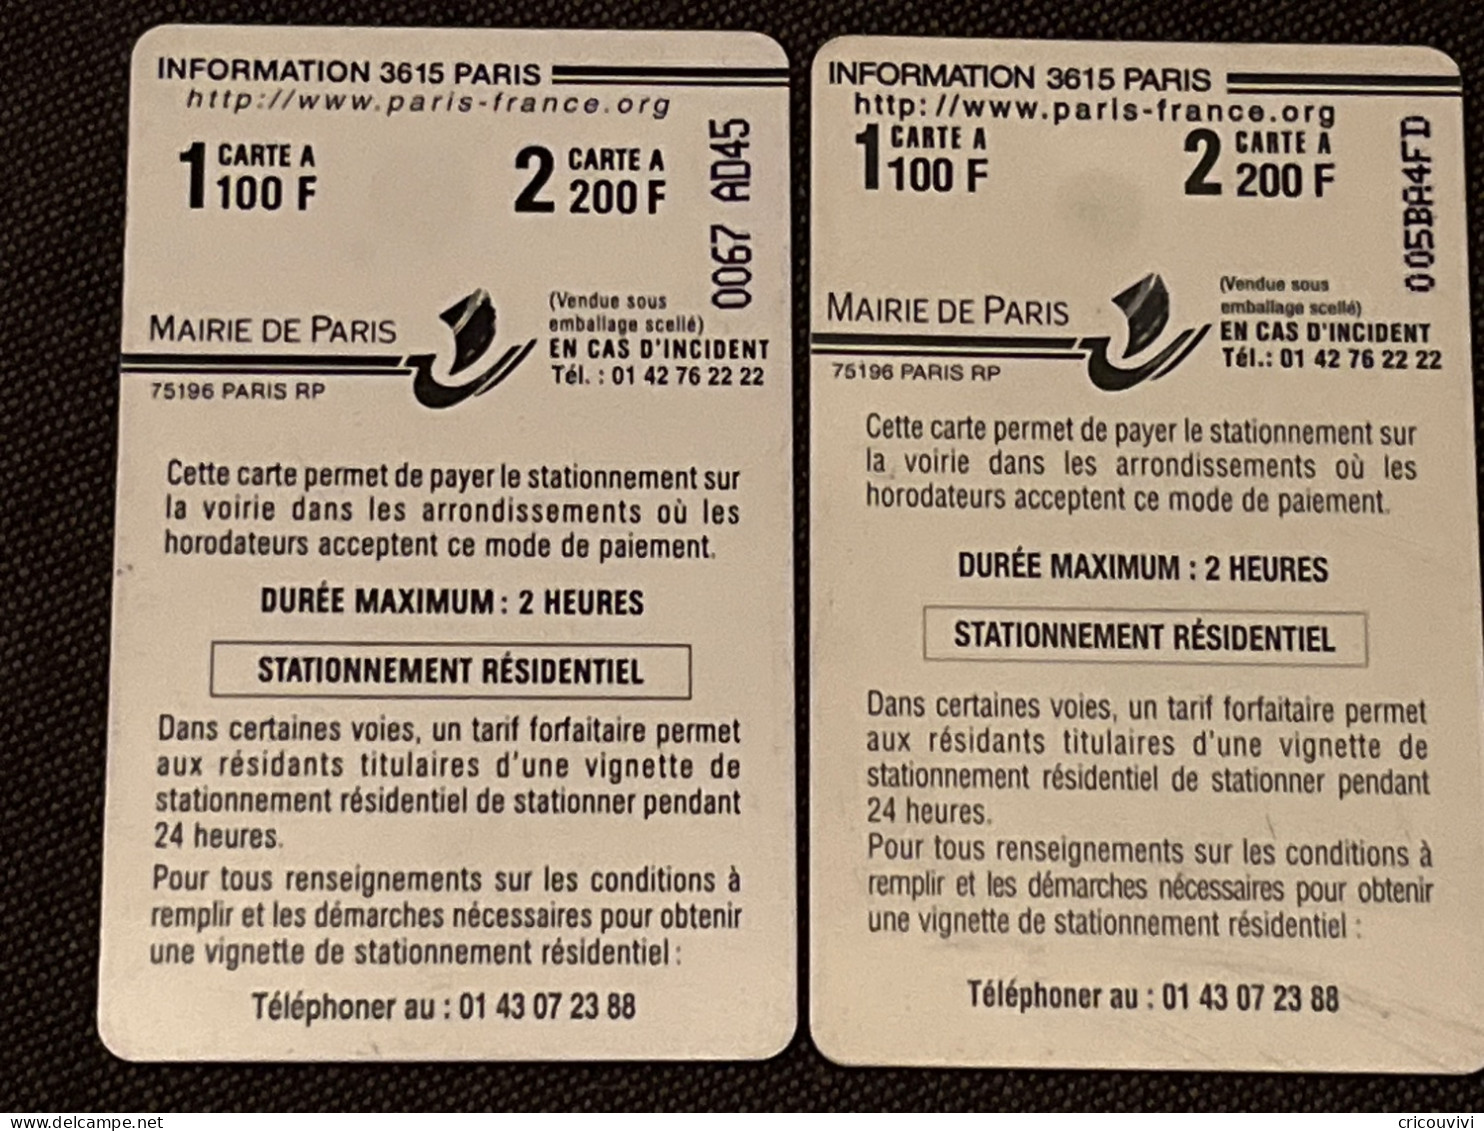 Paris Carte 20 - PIAF Parking Cards